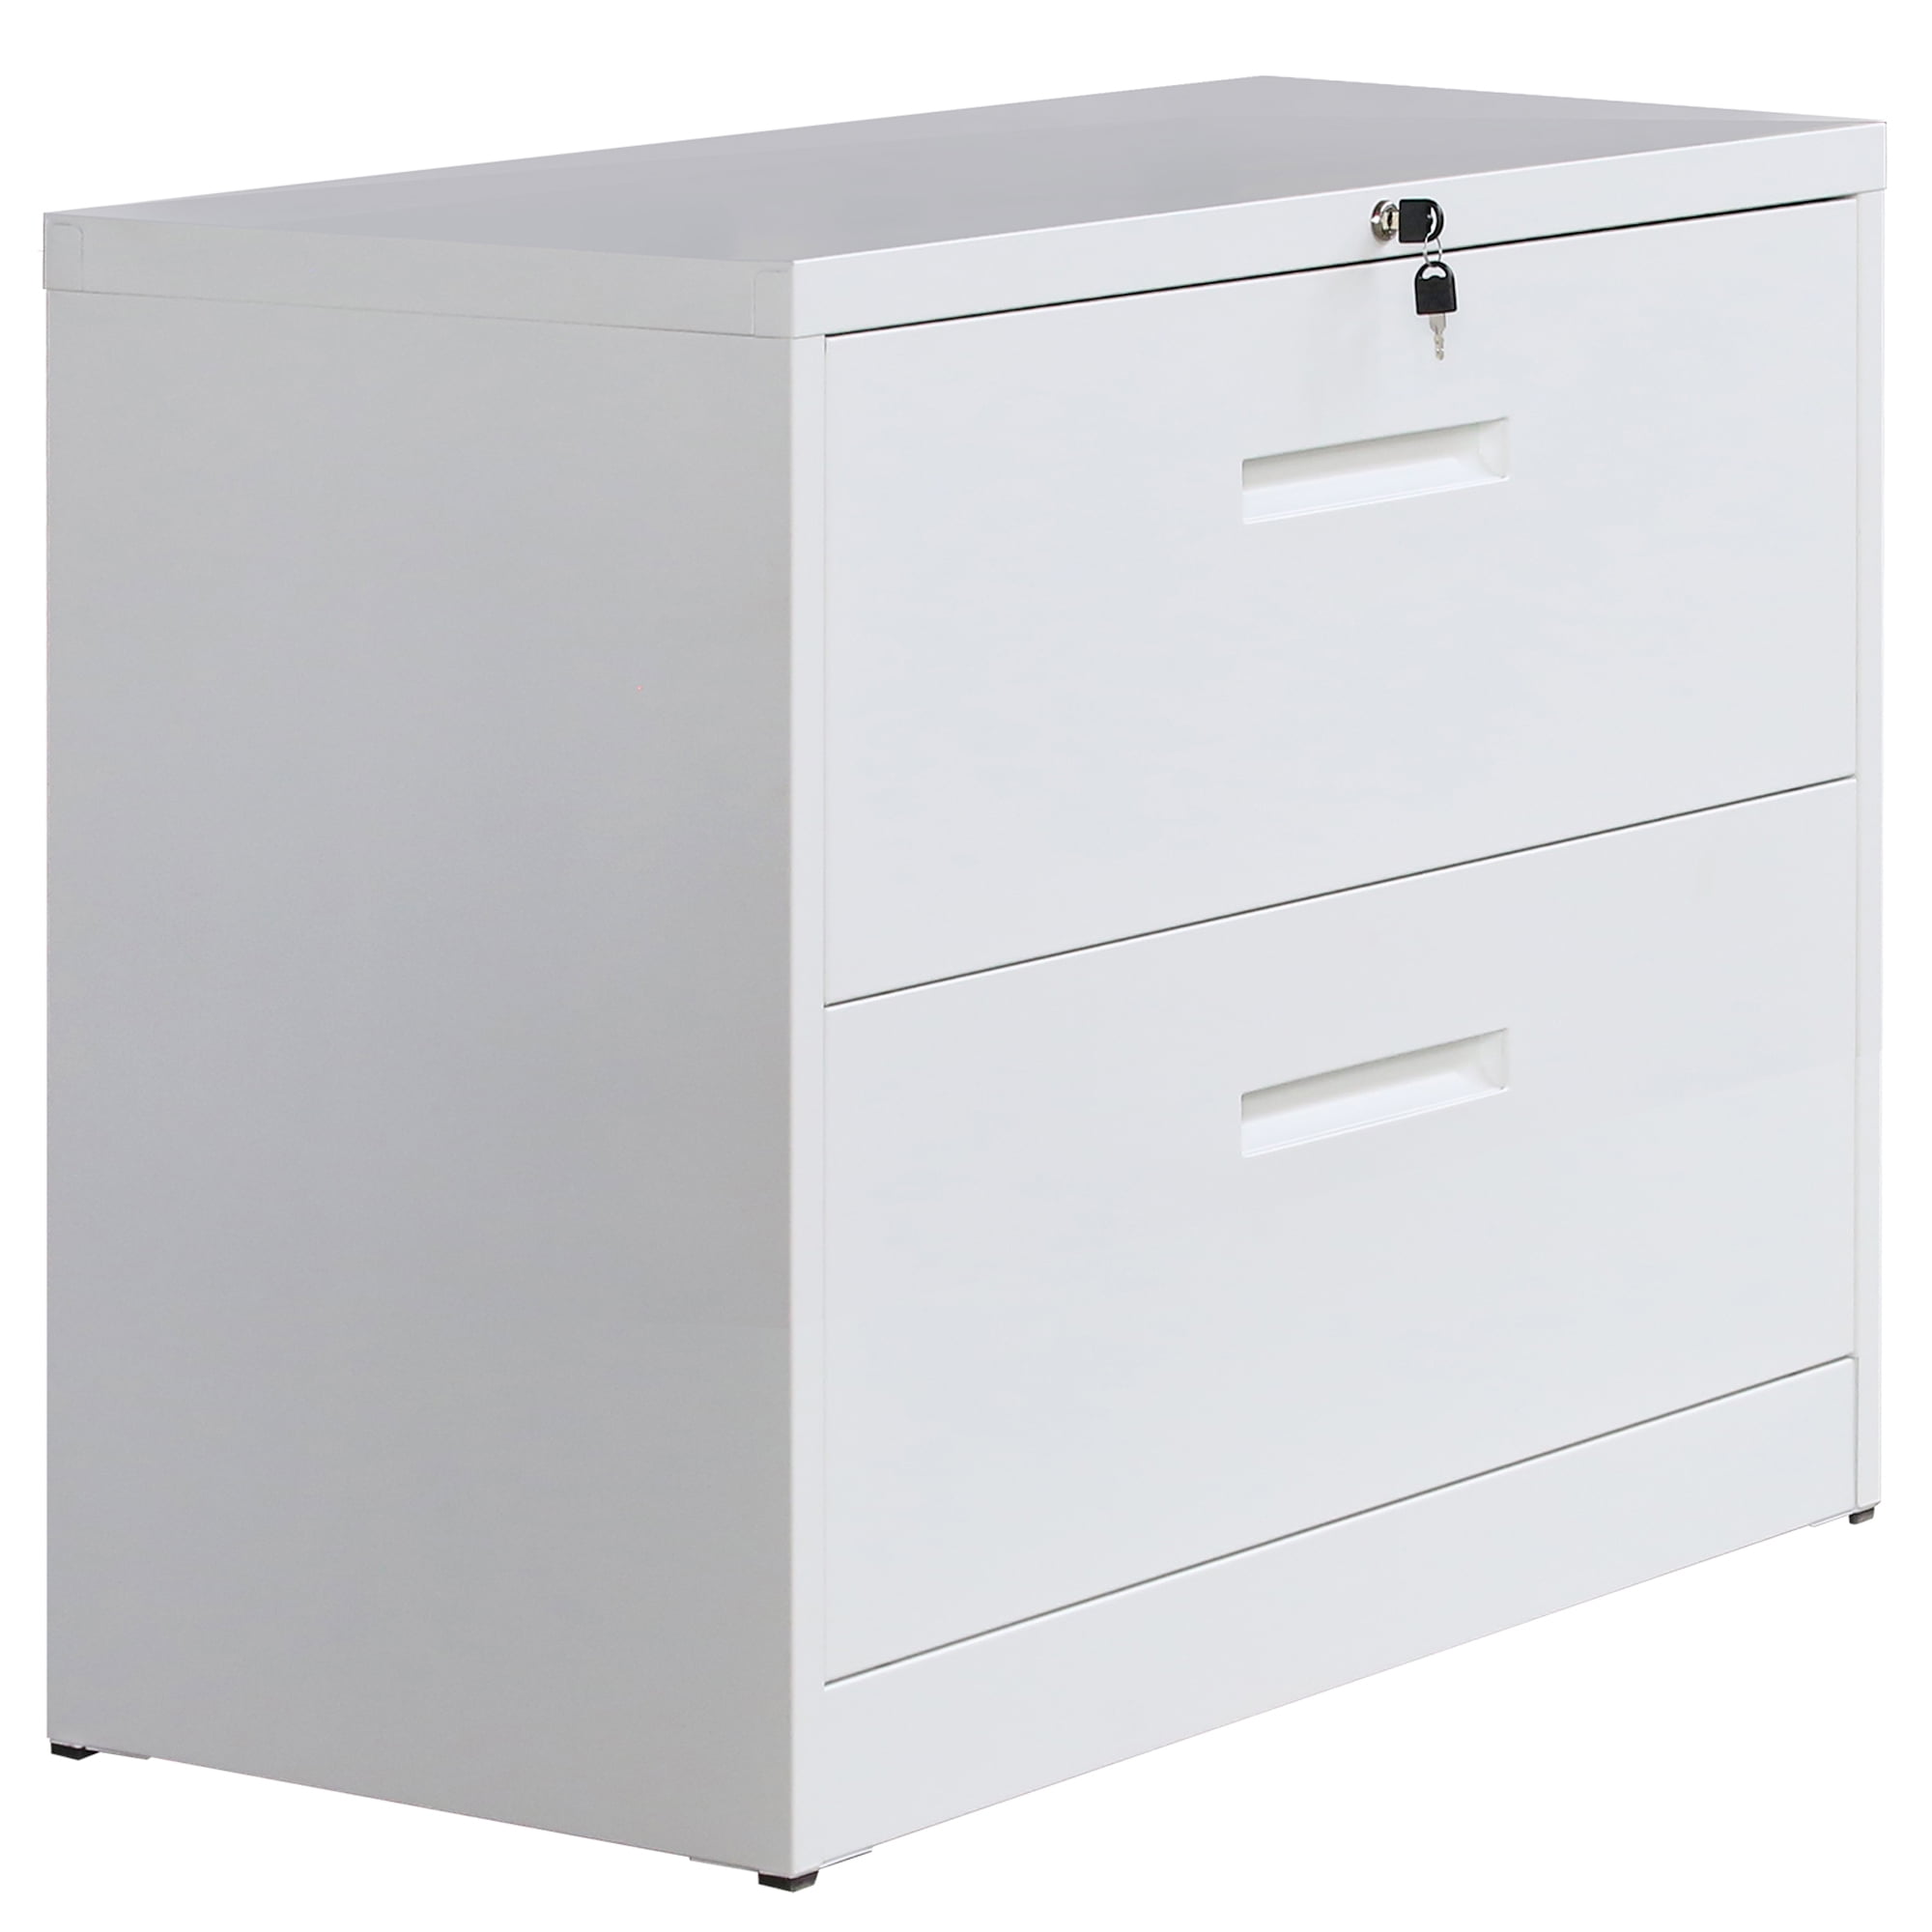 2 Drawer Filing Cabinet Modern, Modern Office File Cabinets